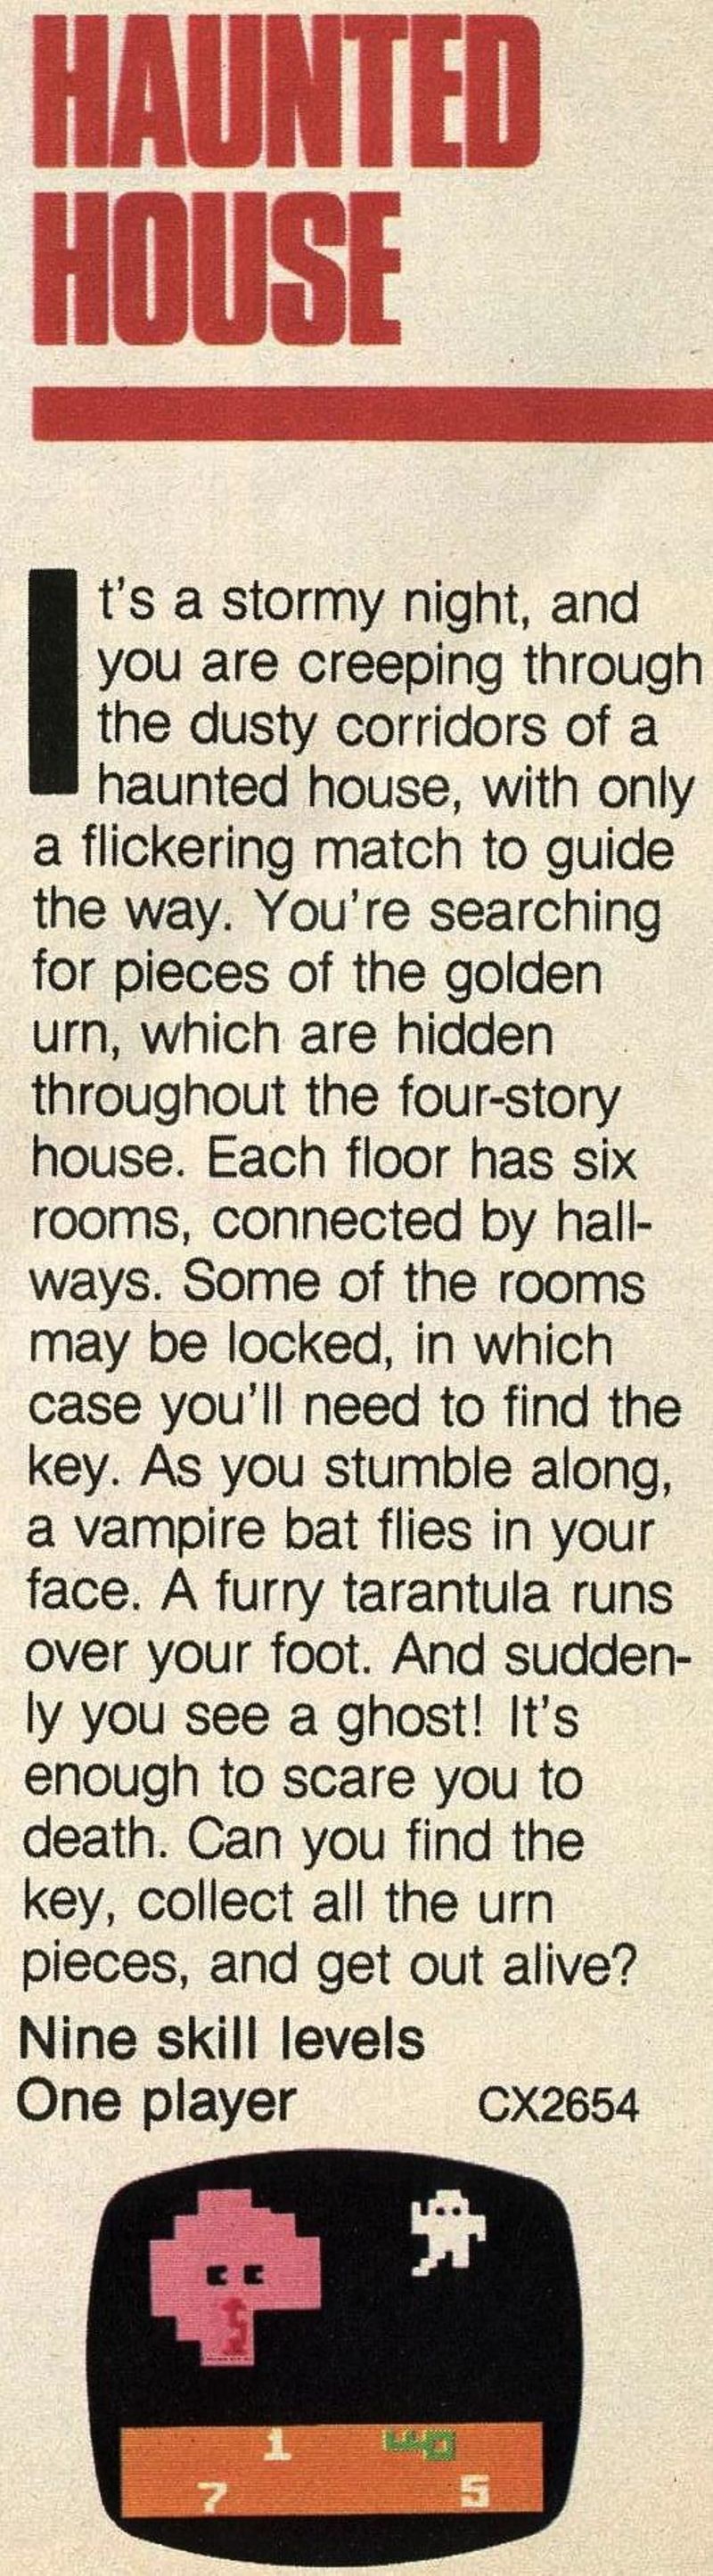 Haunted House entry in the 1981 Atari Catalog.